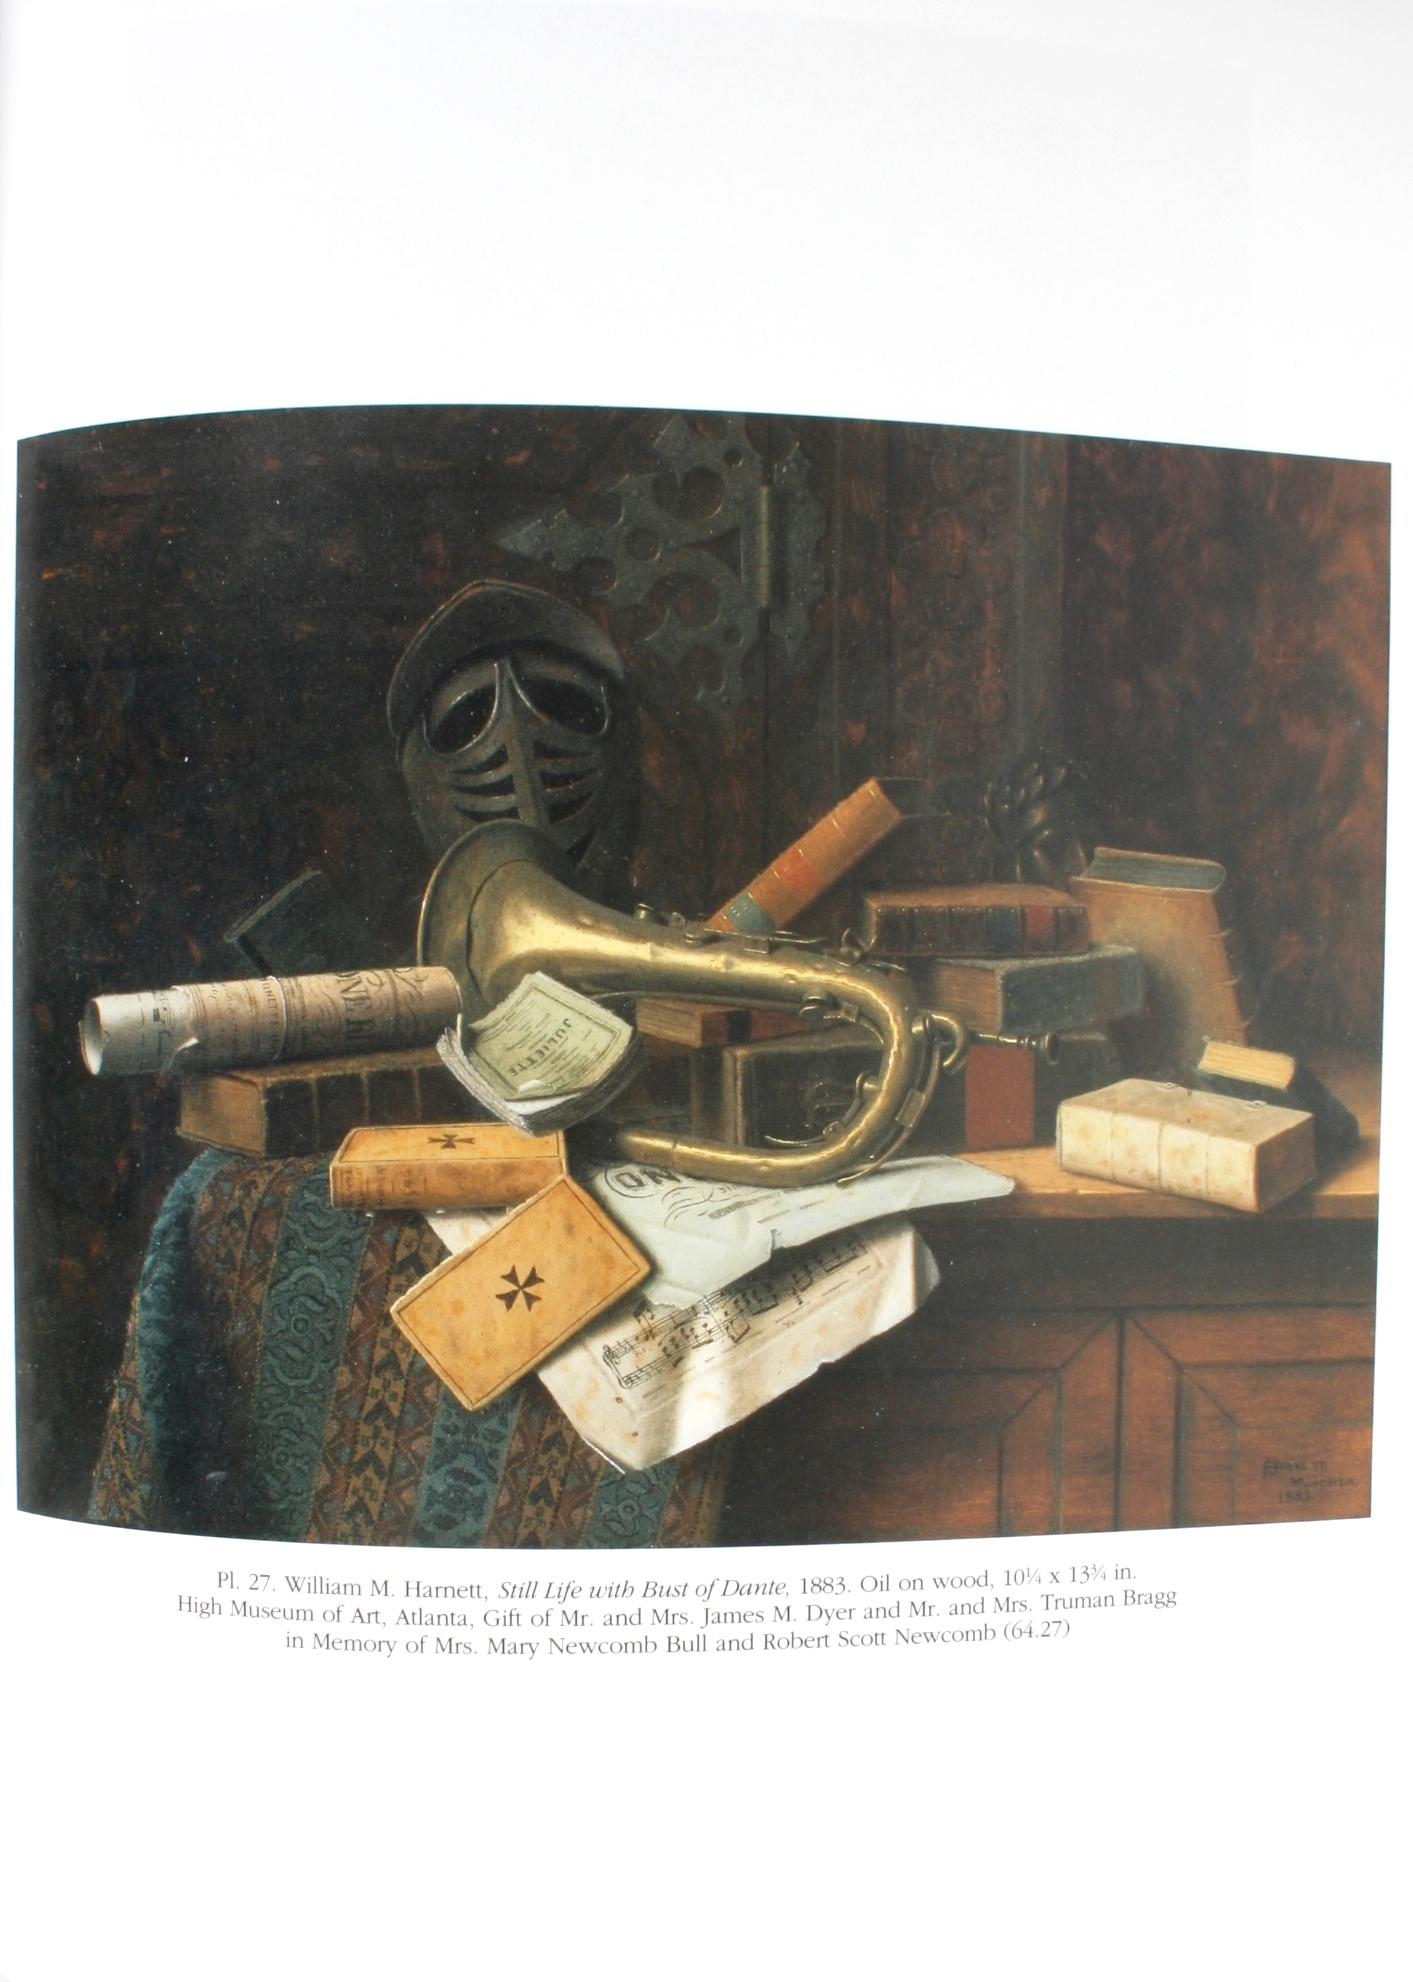 William M. Harnett, First Edition Exhibition Catalogue 4